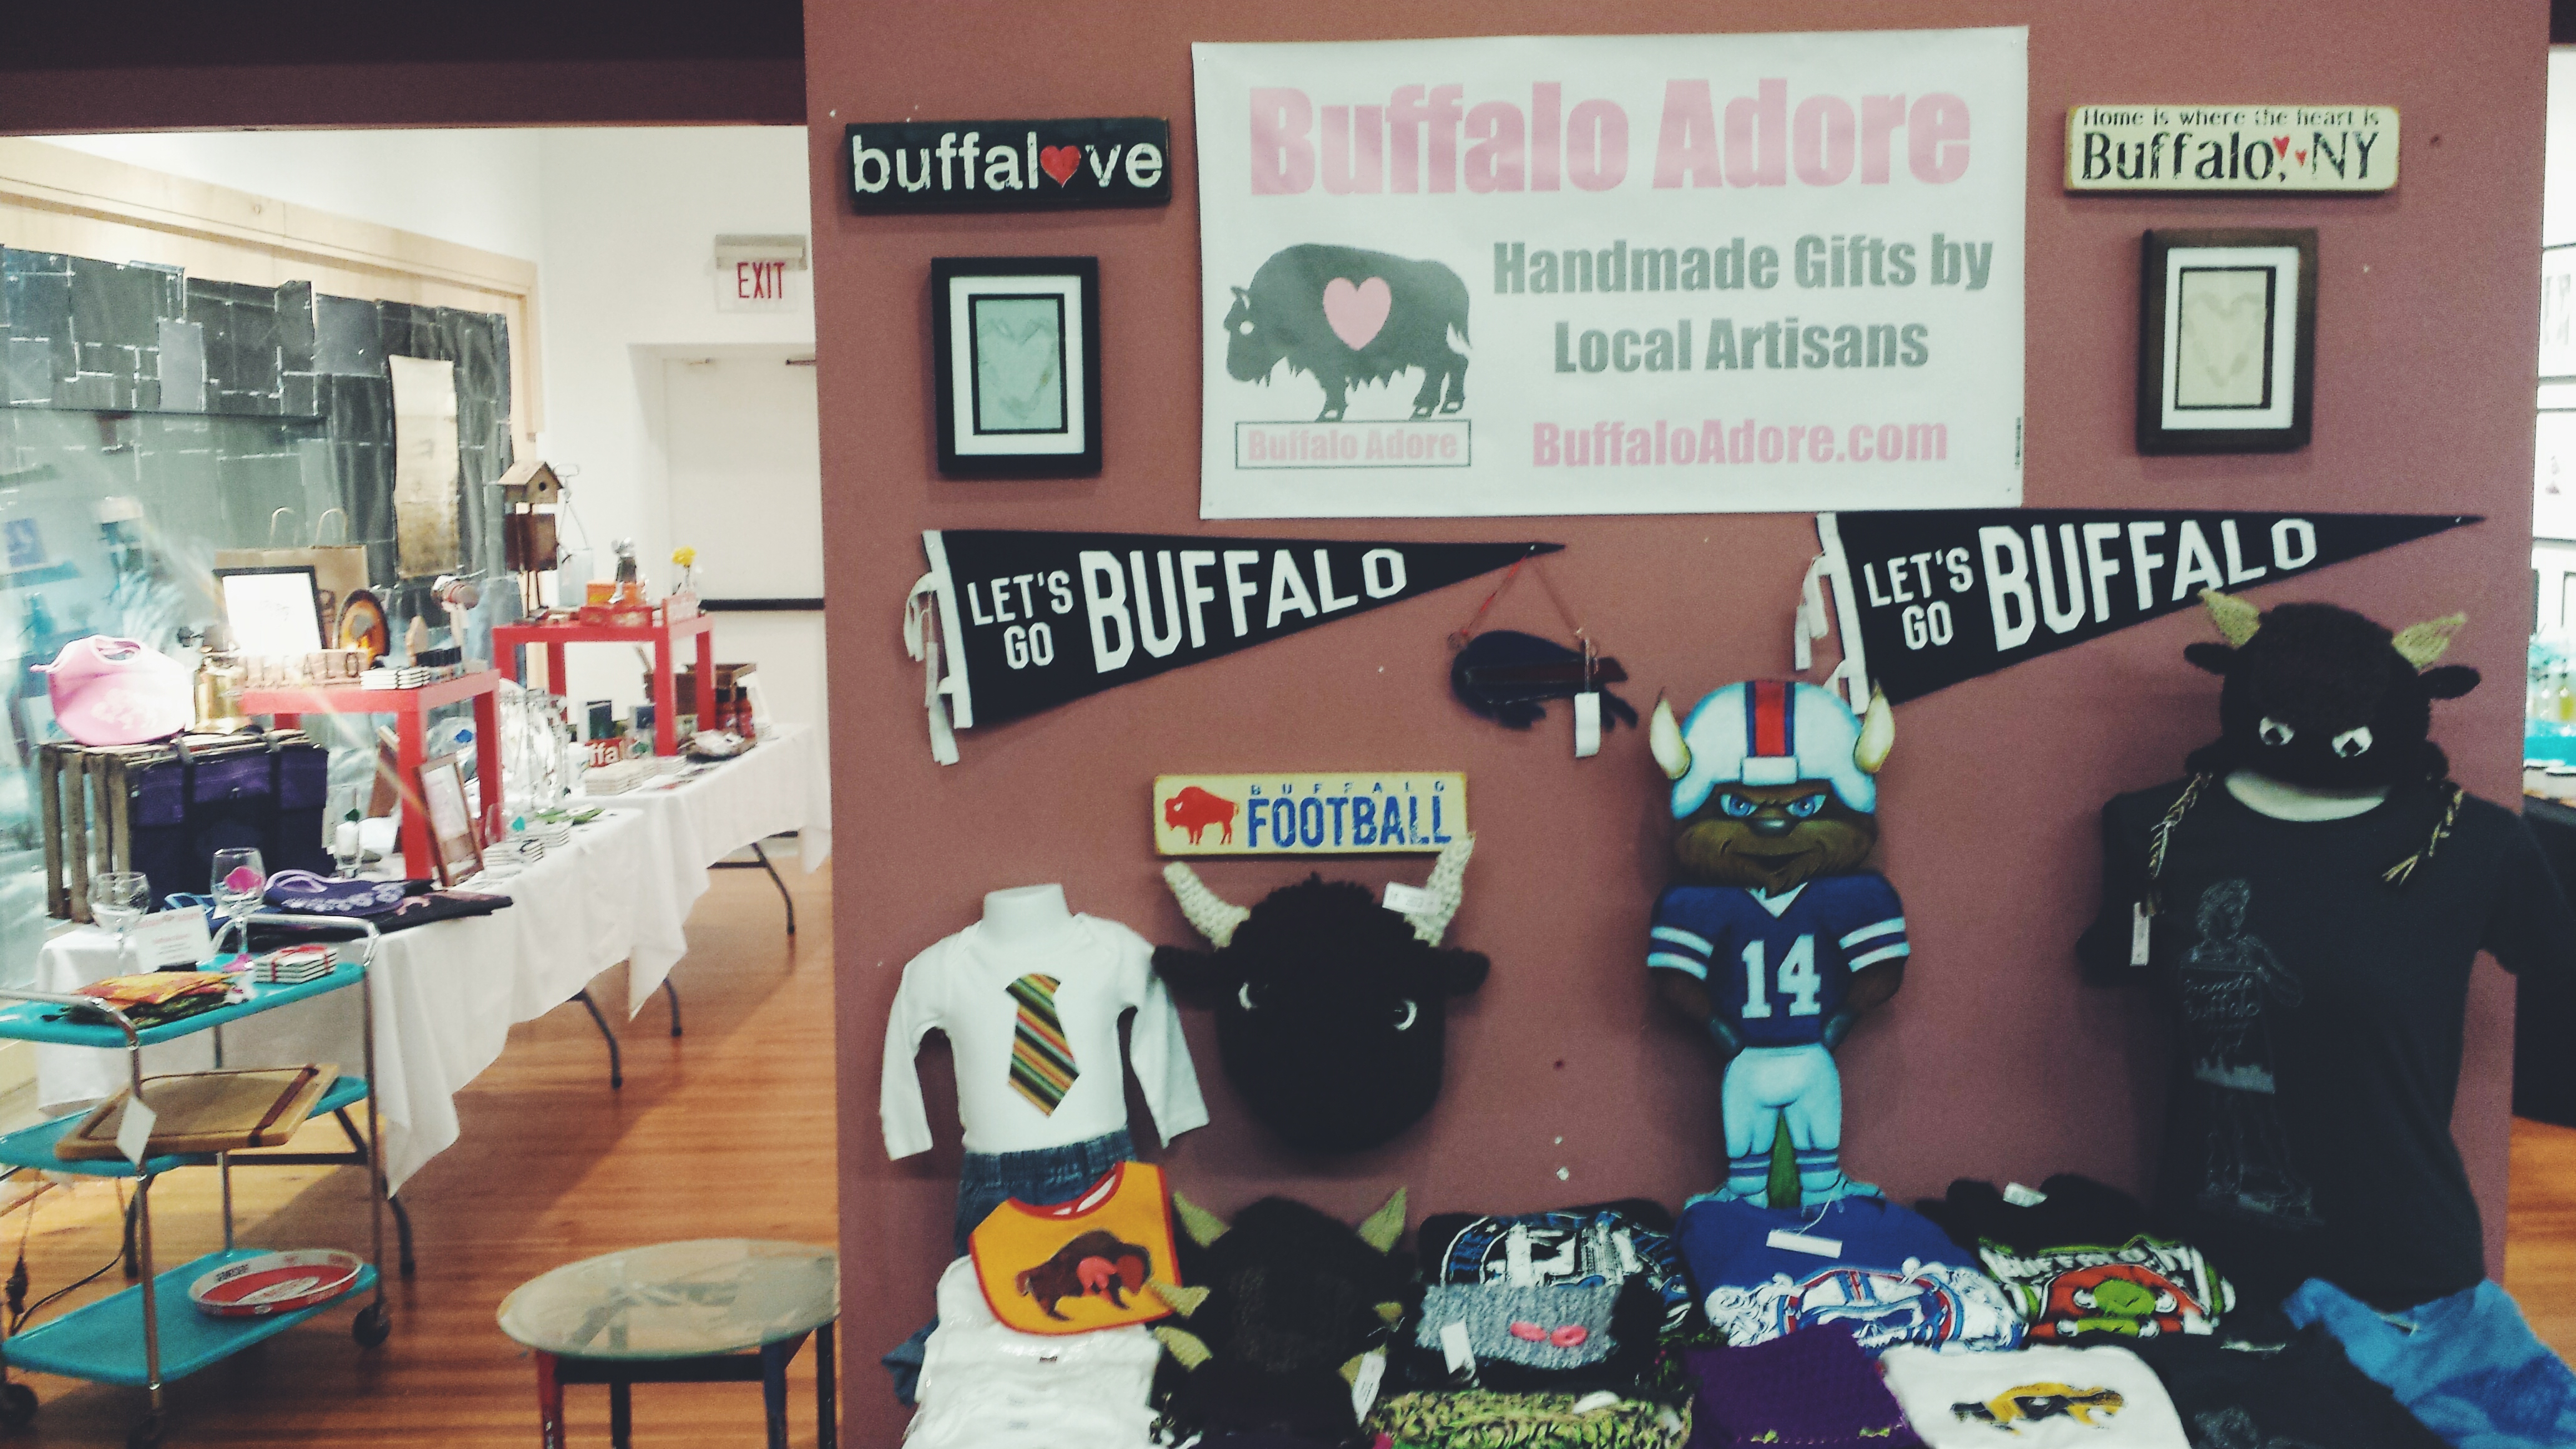 Buffalo Adore, Small Business